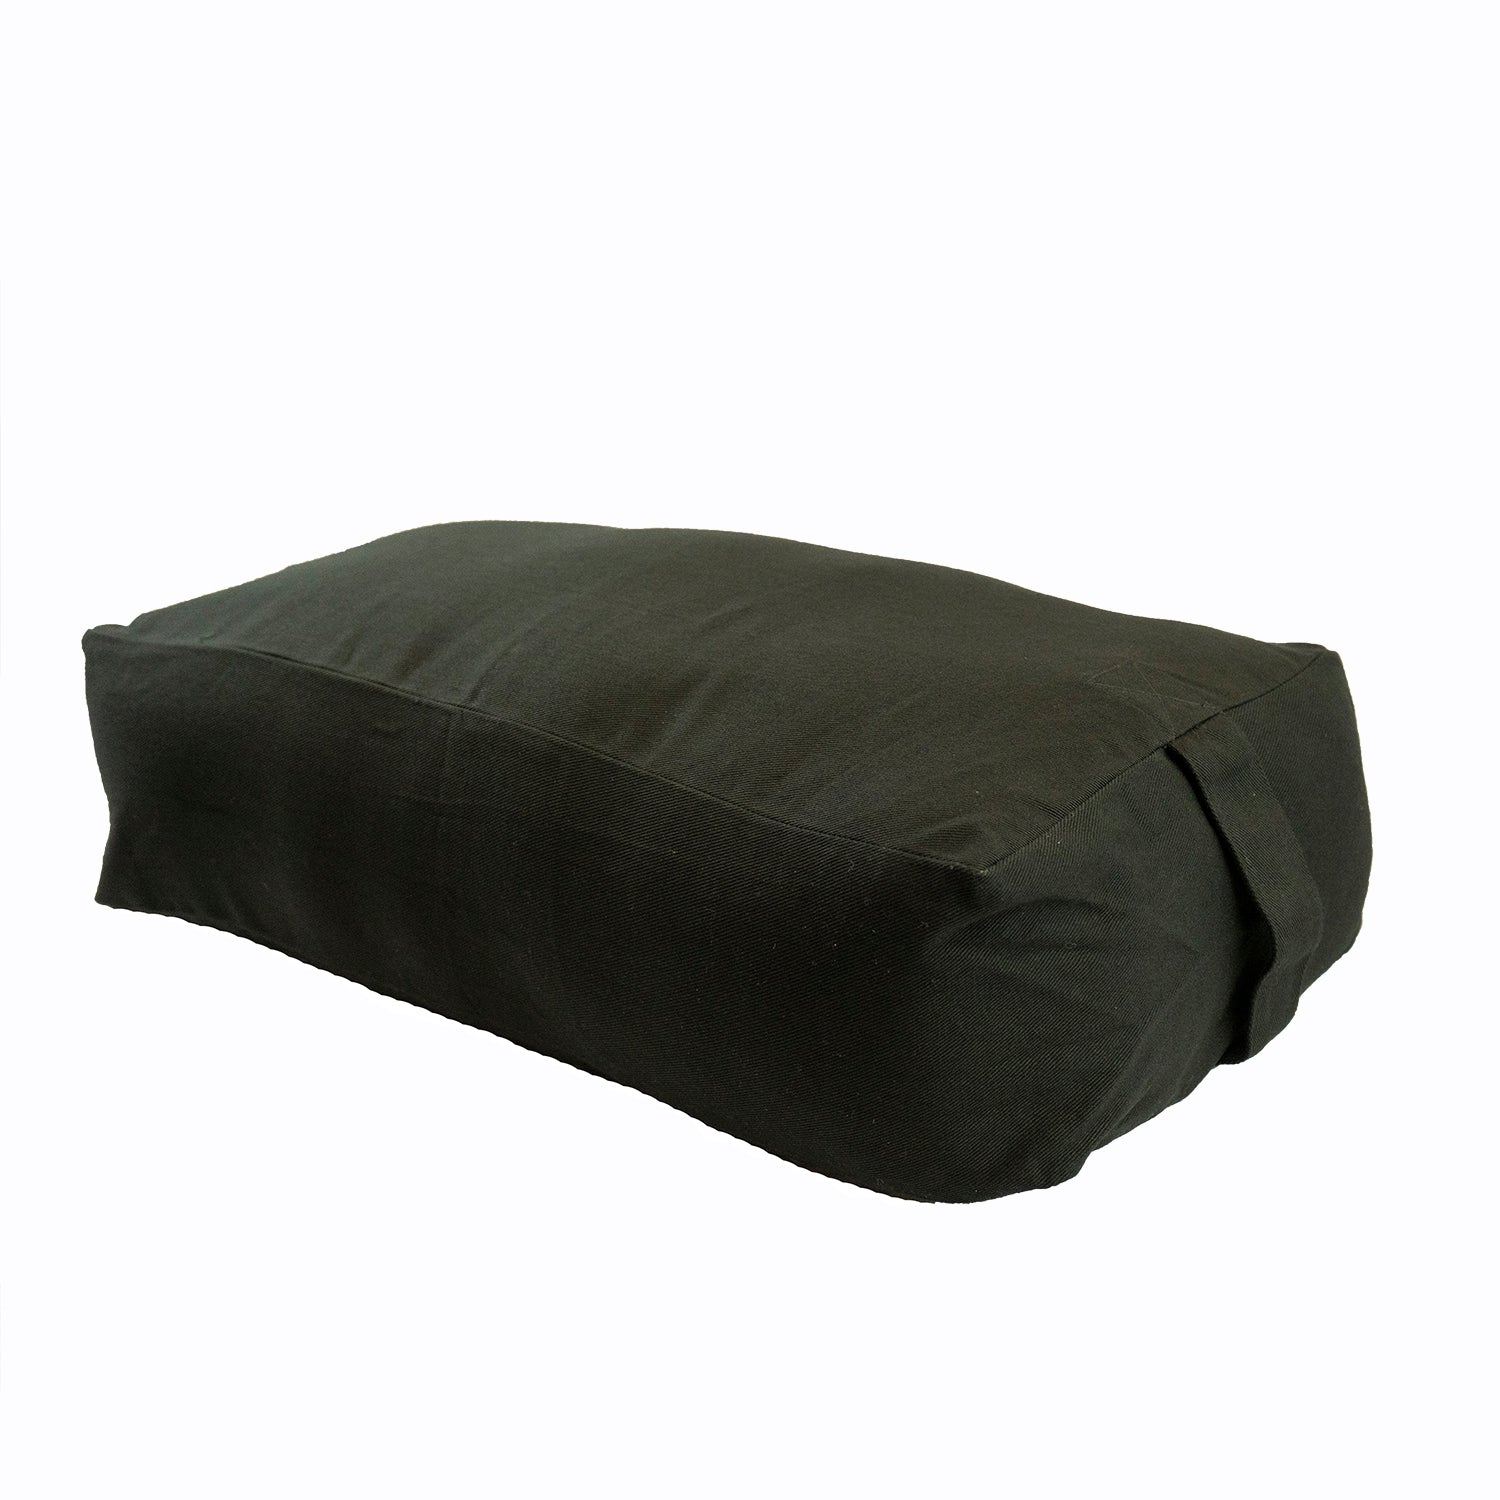  Yoga Bolster Pillow 26x10.5x5.5in Rectangular Yoga Pillow  Supportive Meditation Cushion Restorative Yoga 100% Cotton Meditation  Pillow Supportive Yoga Accessories (Black) : Sports & Outdoors